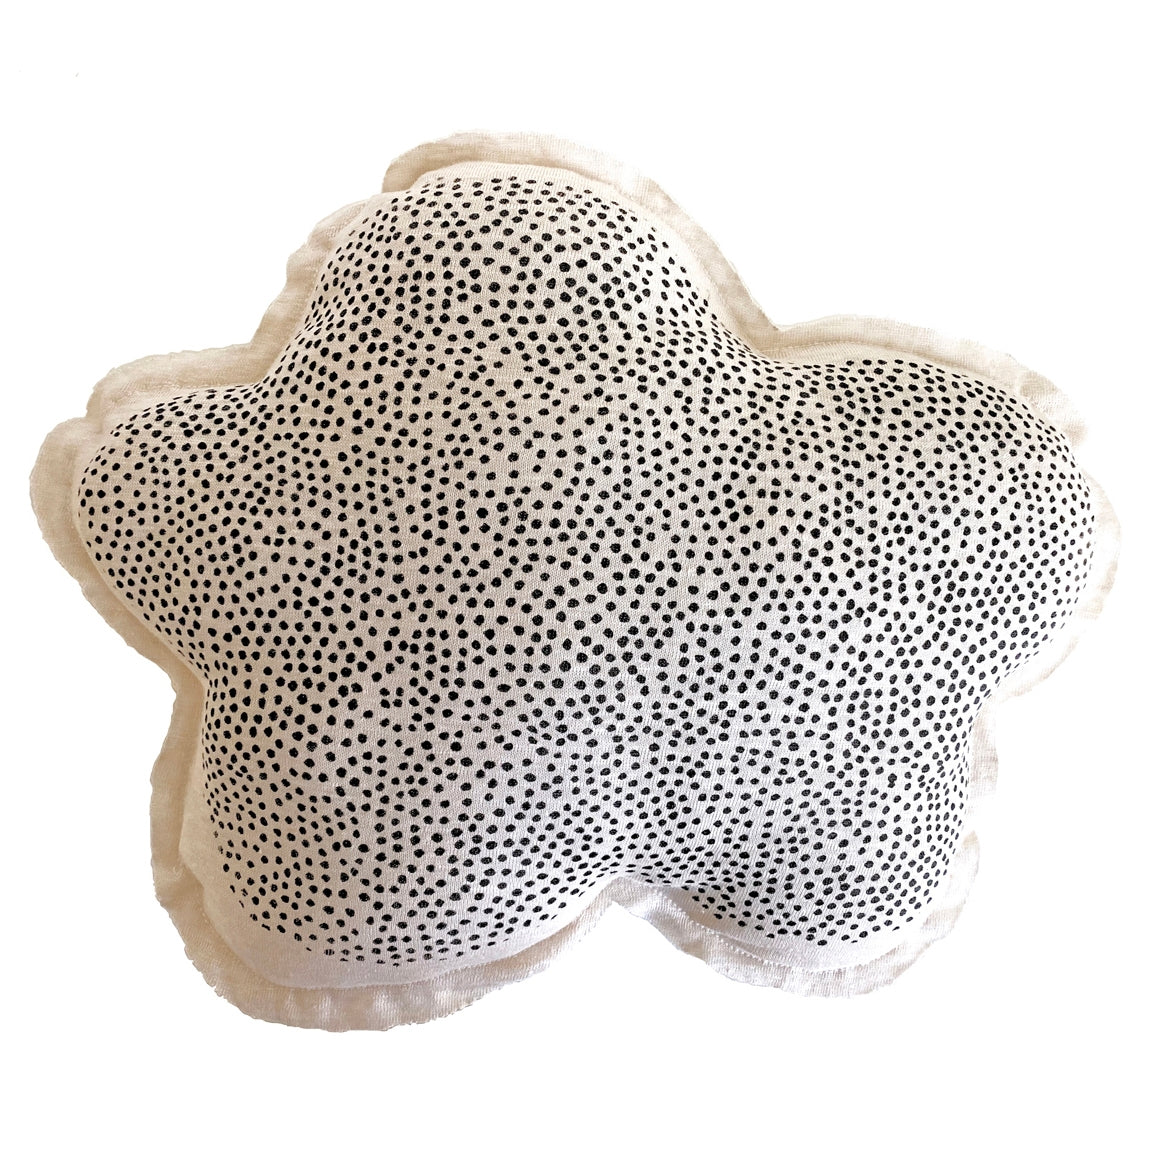 Cloud Shaped Linen Pillow - Speckled Print